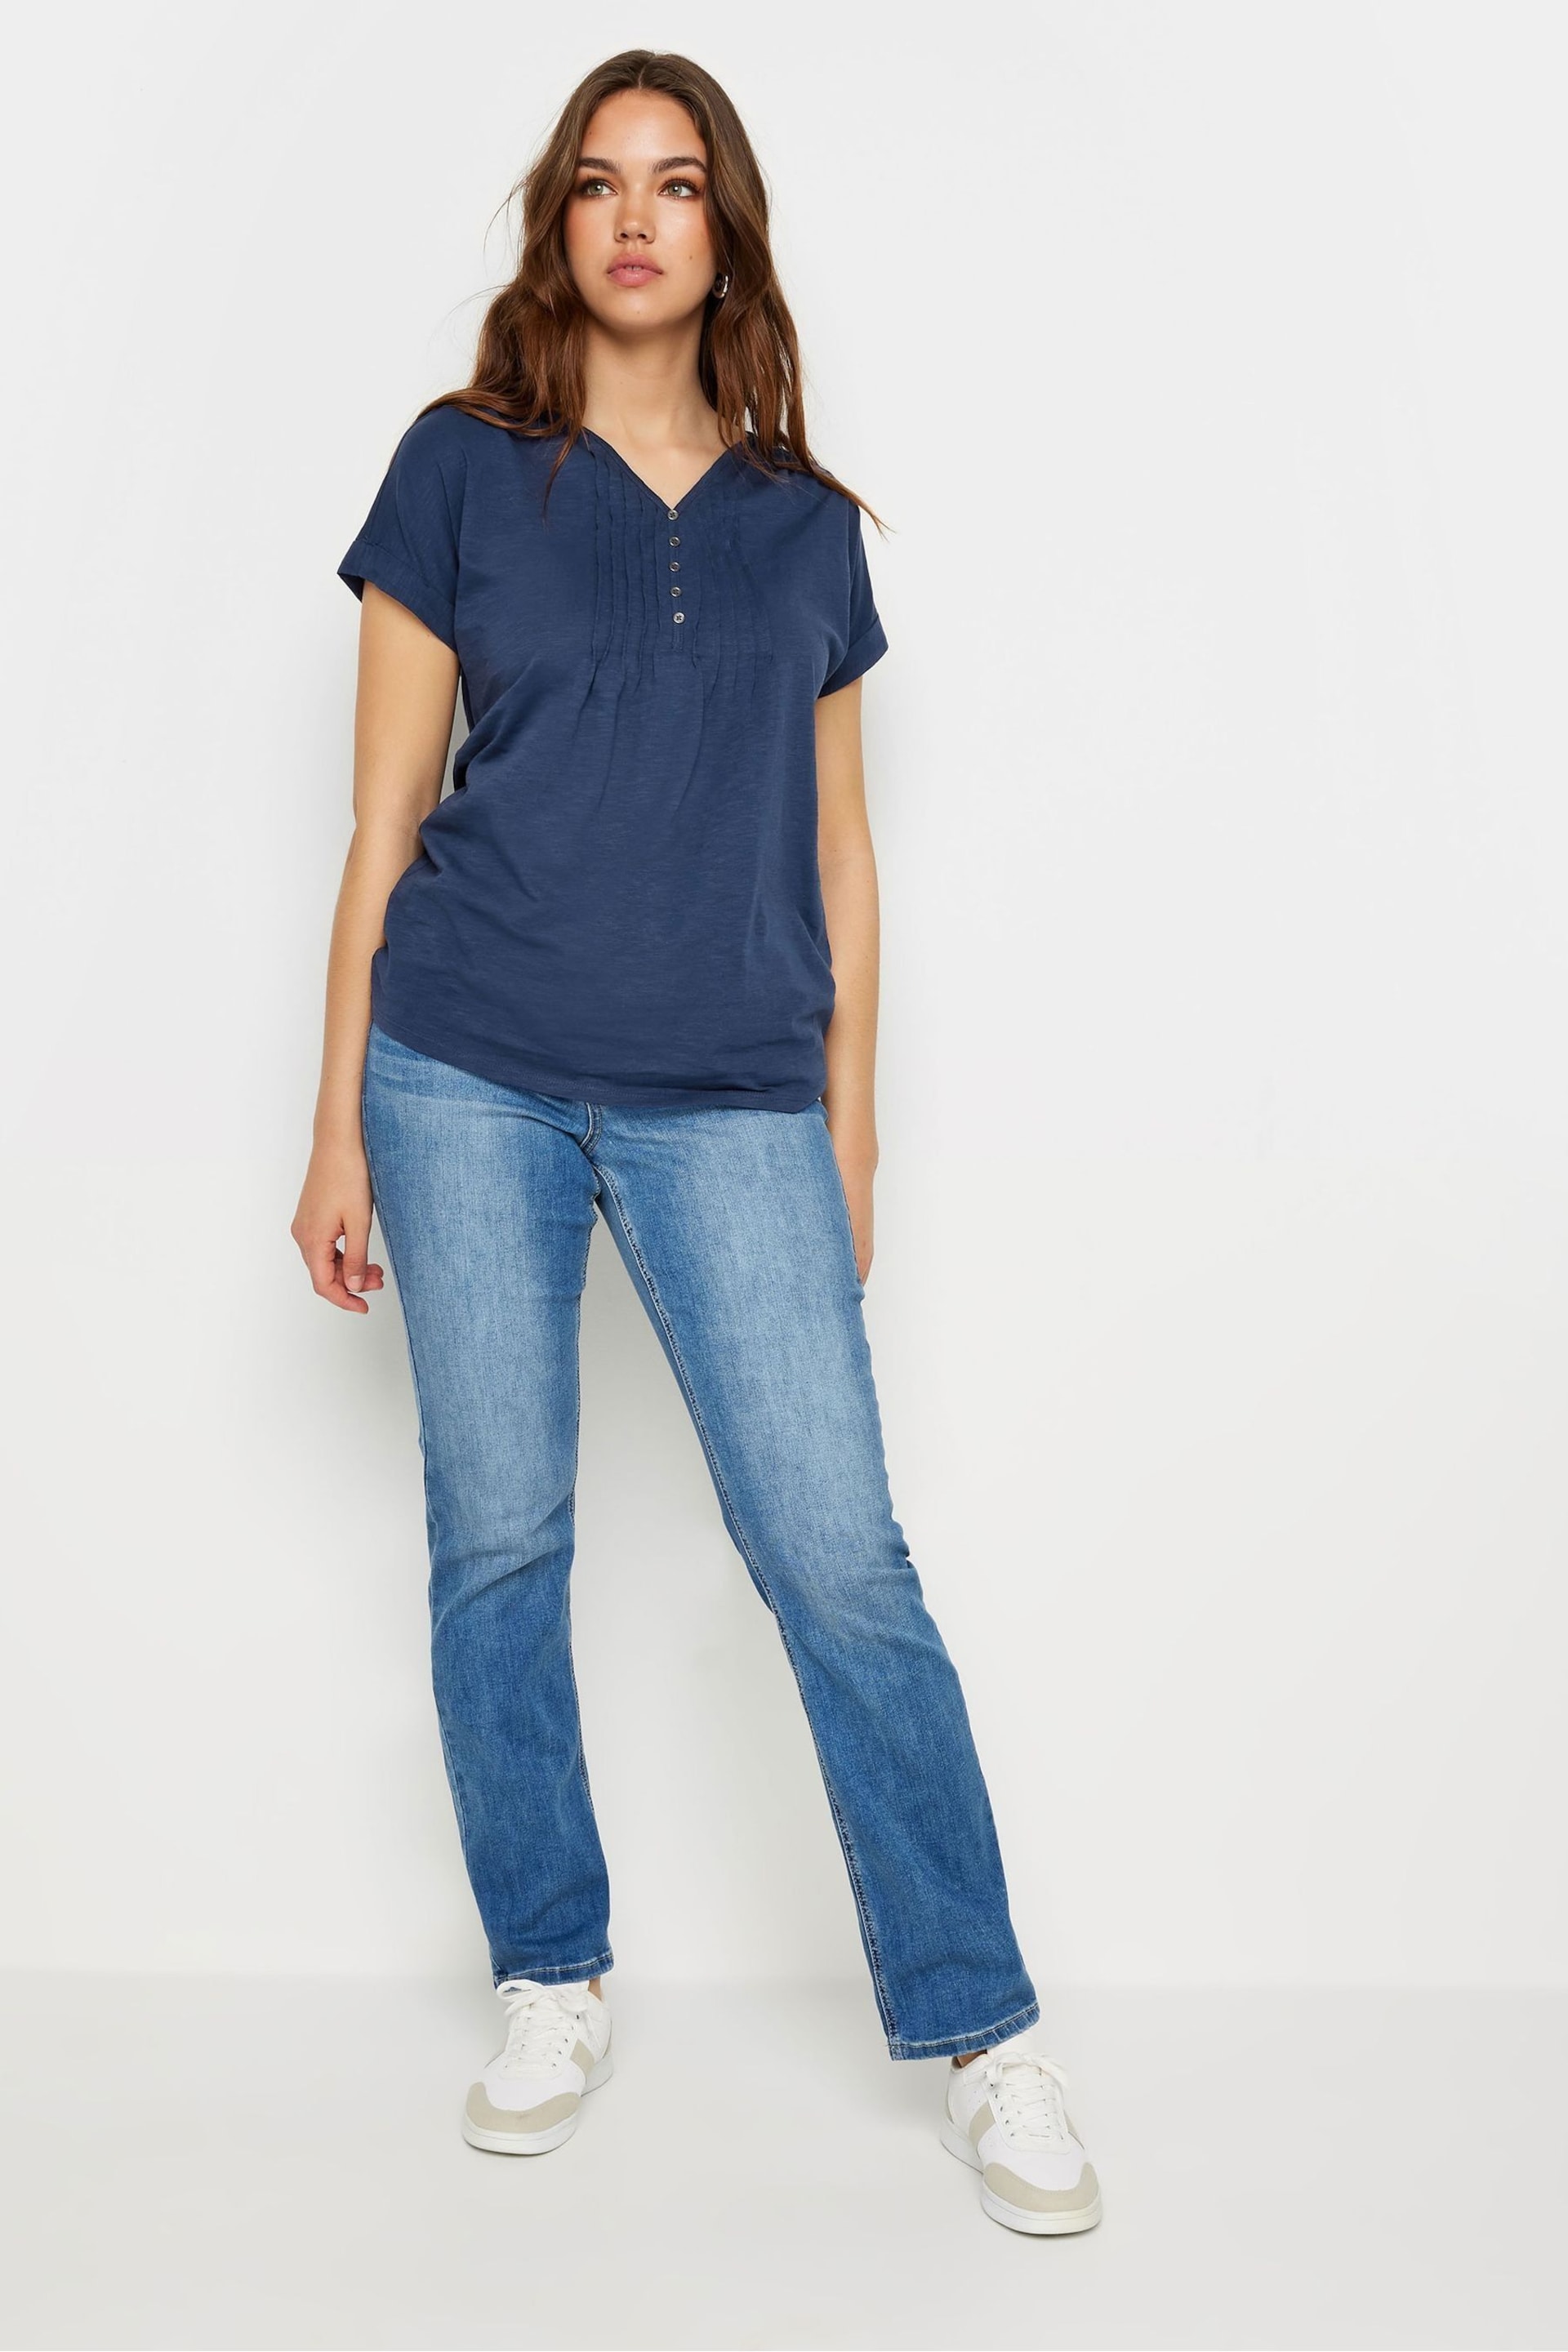 Long Tall Sally Blue LTS Tall Khaki Green Cotton Henley T-Shirt - Image 4 of 6